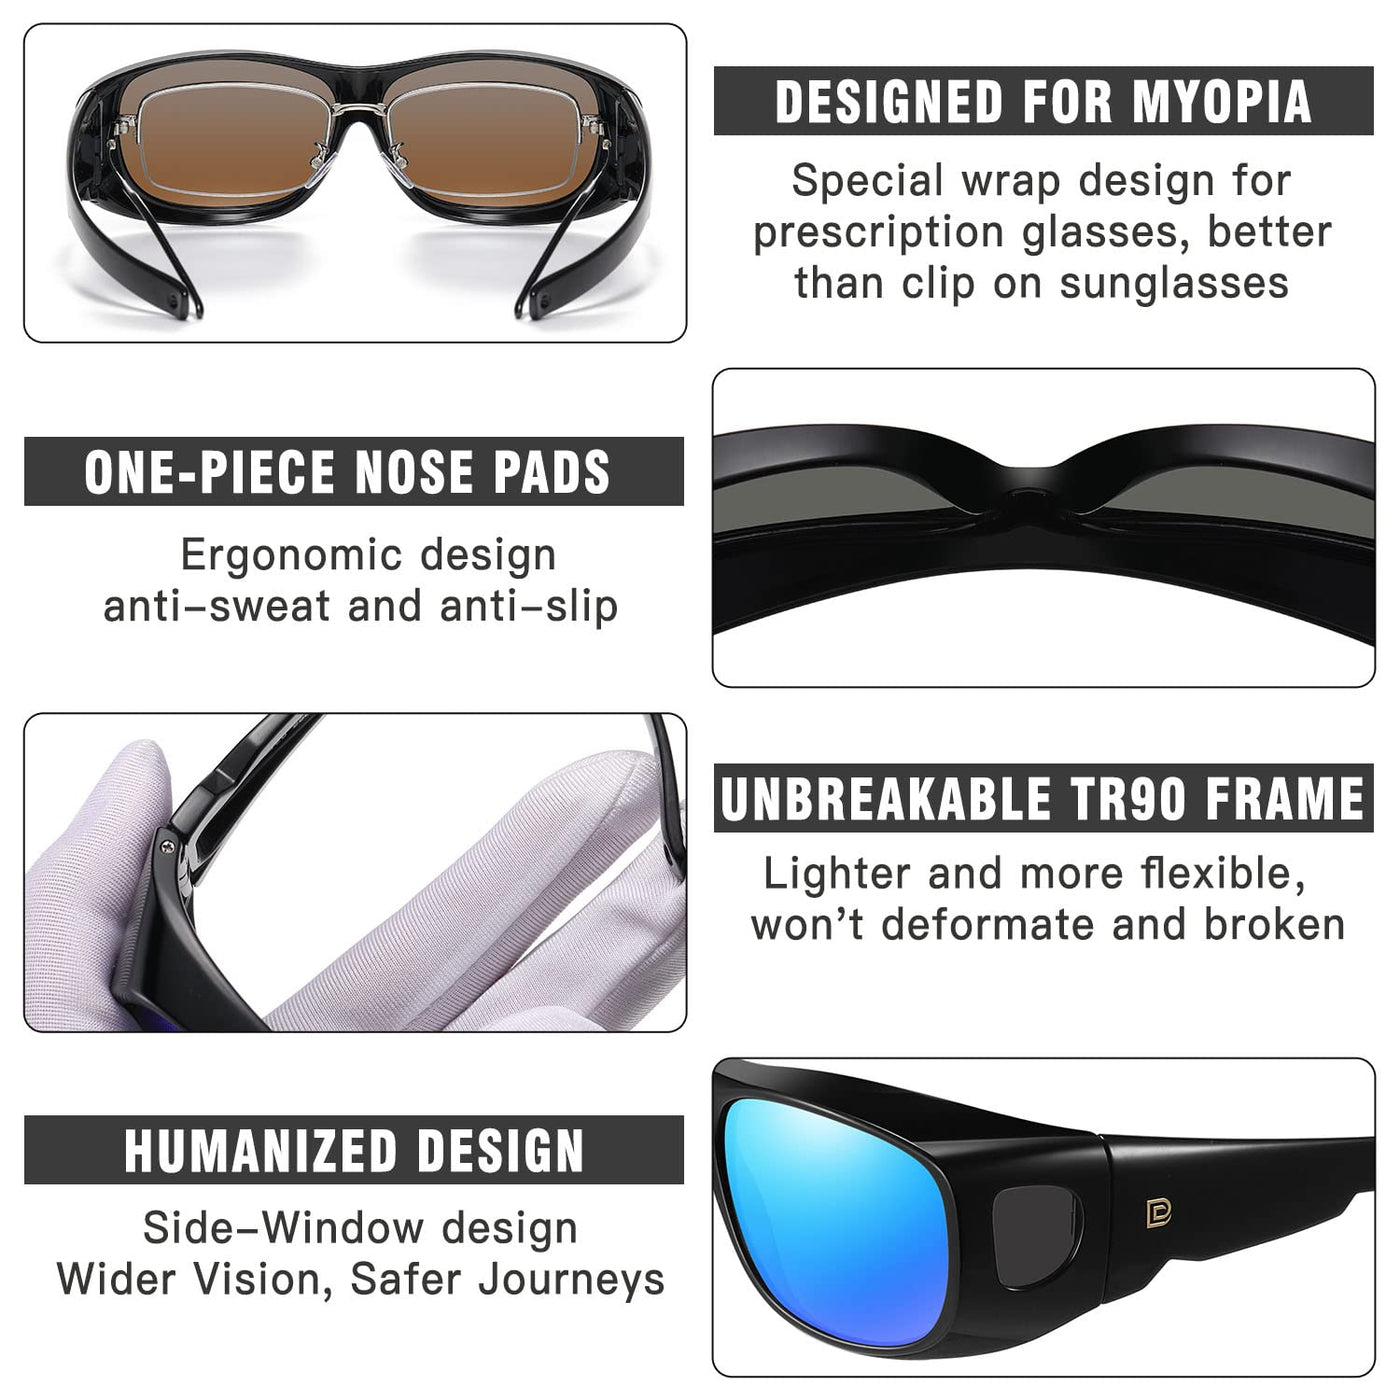 DUCO Over Glasses Sunglasses for Women Men, Polarized Fit Over Sunglasses UV400 Protection TR90 Wrap Around Sunglasses DC8965